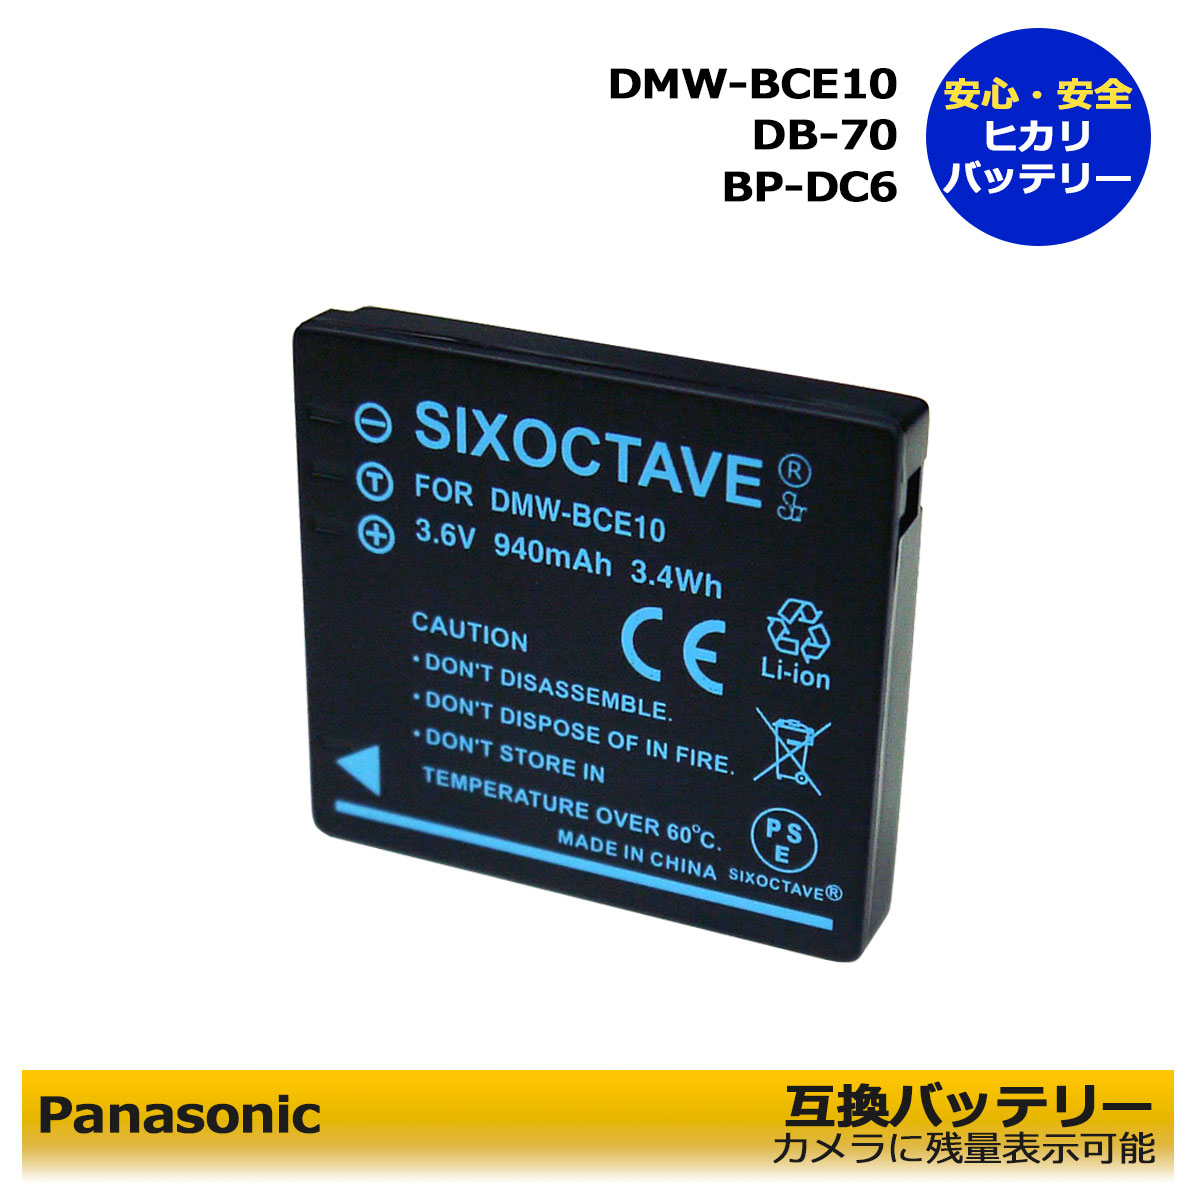 DMW-BCE10　DMW-BCE-10-E　PANASONIC　互換バッテリー　1個　残量表示可能HM-TA1 / HM-TA1H / HM-TA1R / HM-TA1V / HM-TA1W / HM-TA1GK / SDR-S7K / SDR-S7S / SDR-S7EG-K/ SDR-S7EG-S / SDR-S9EG-S / SDR-S10 / SDR-S10P1 / SDR-S10EB-K / SDR-S10EG-K / SDR-S15 / SDR-S26